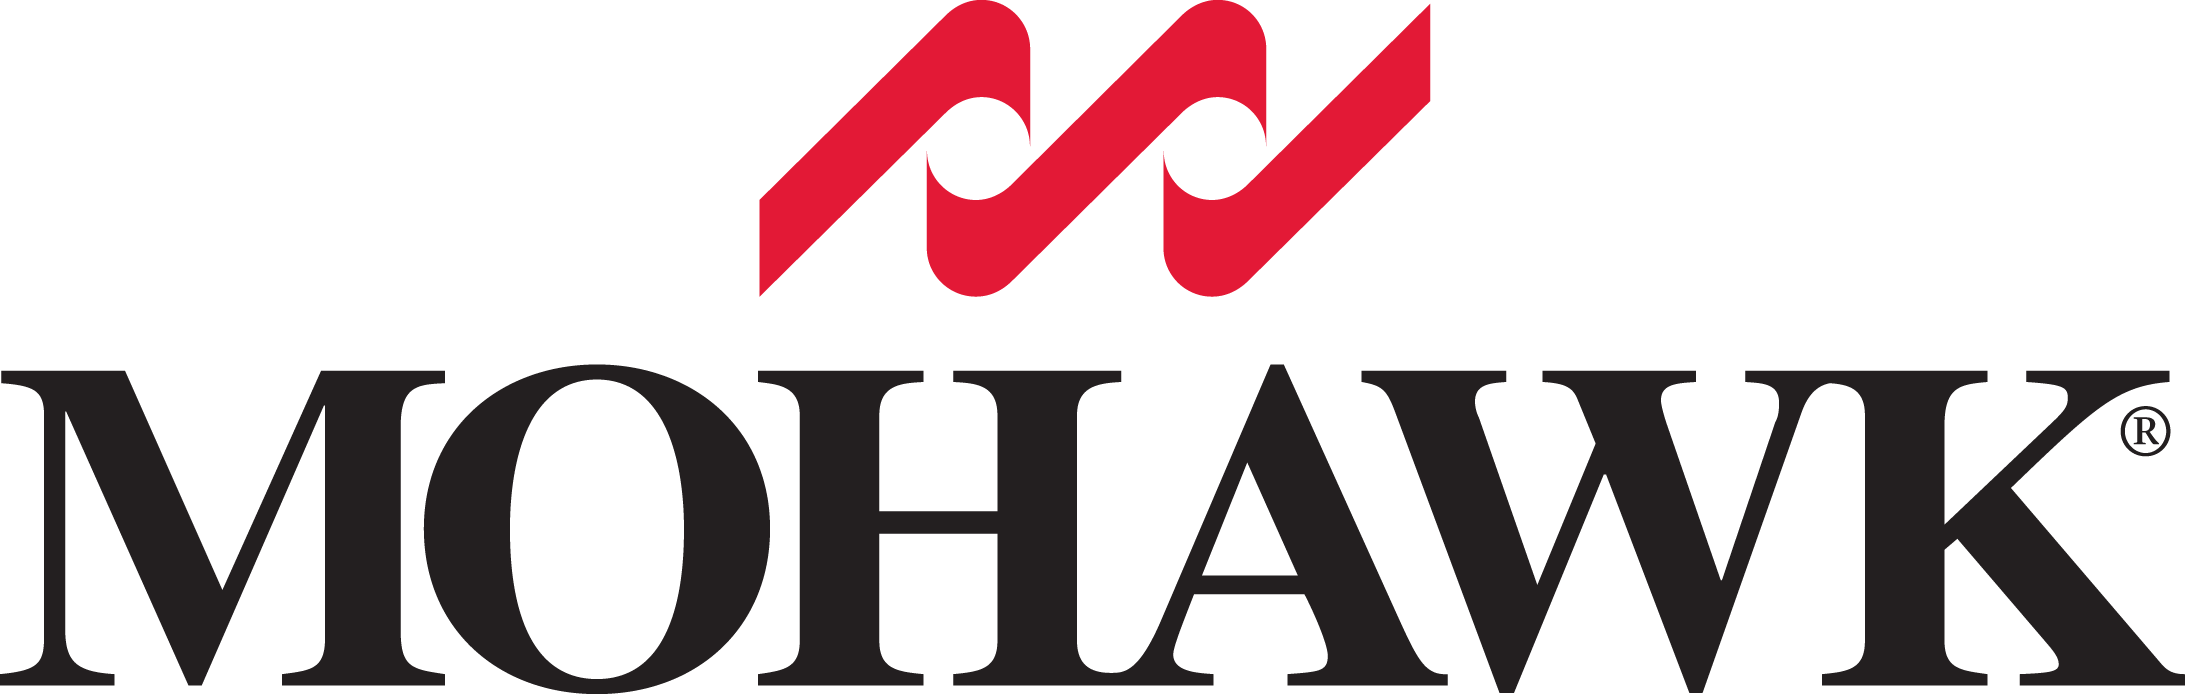 Mowhawk logo